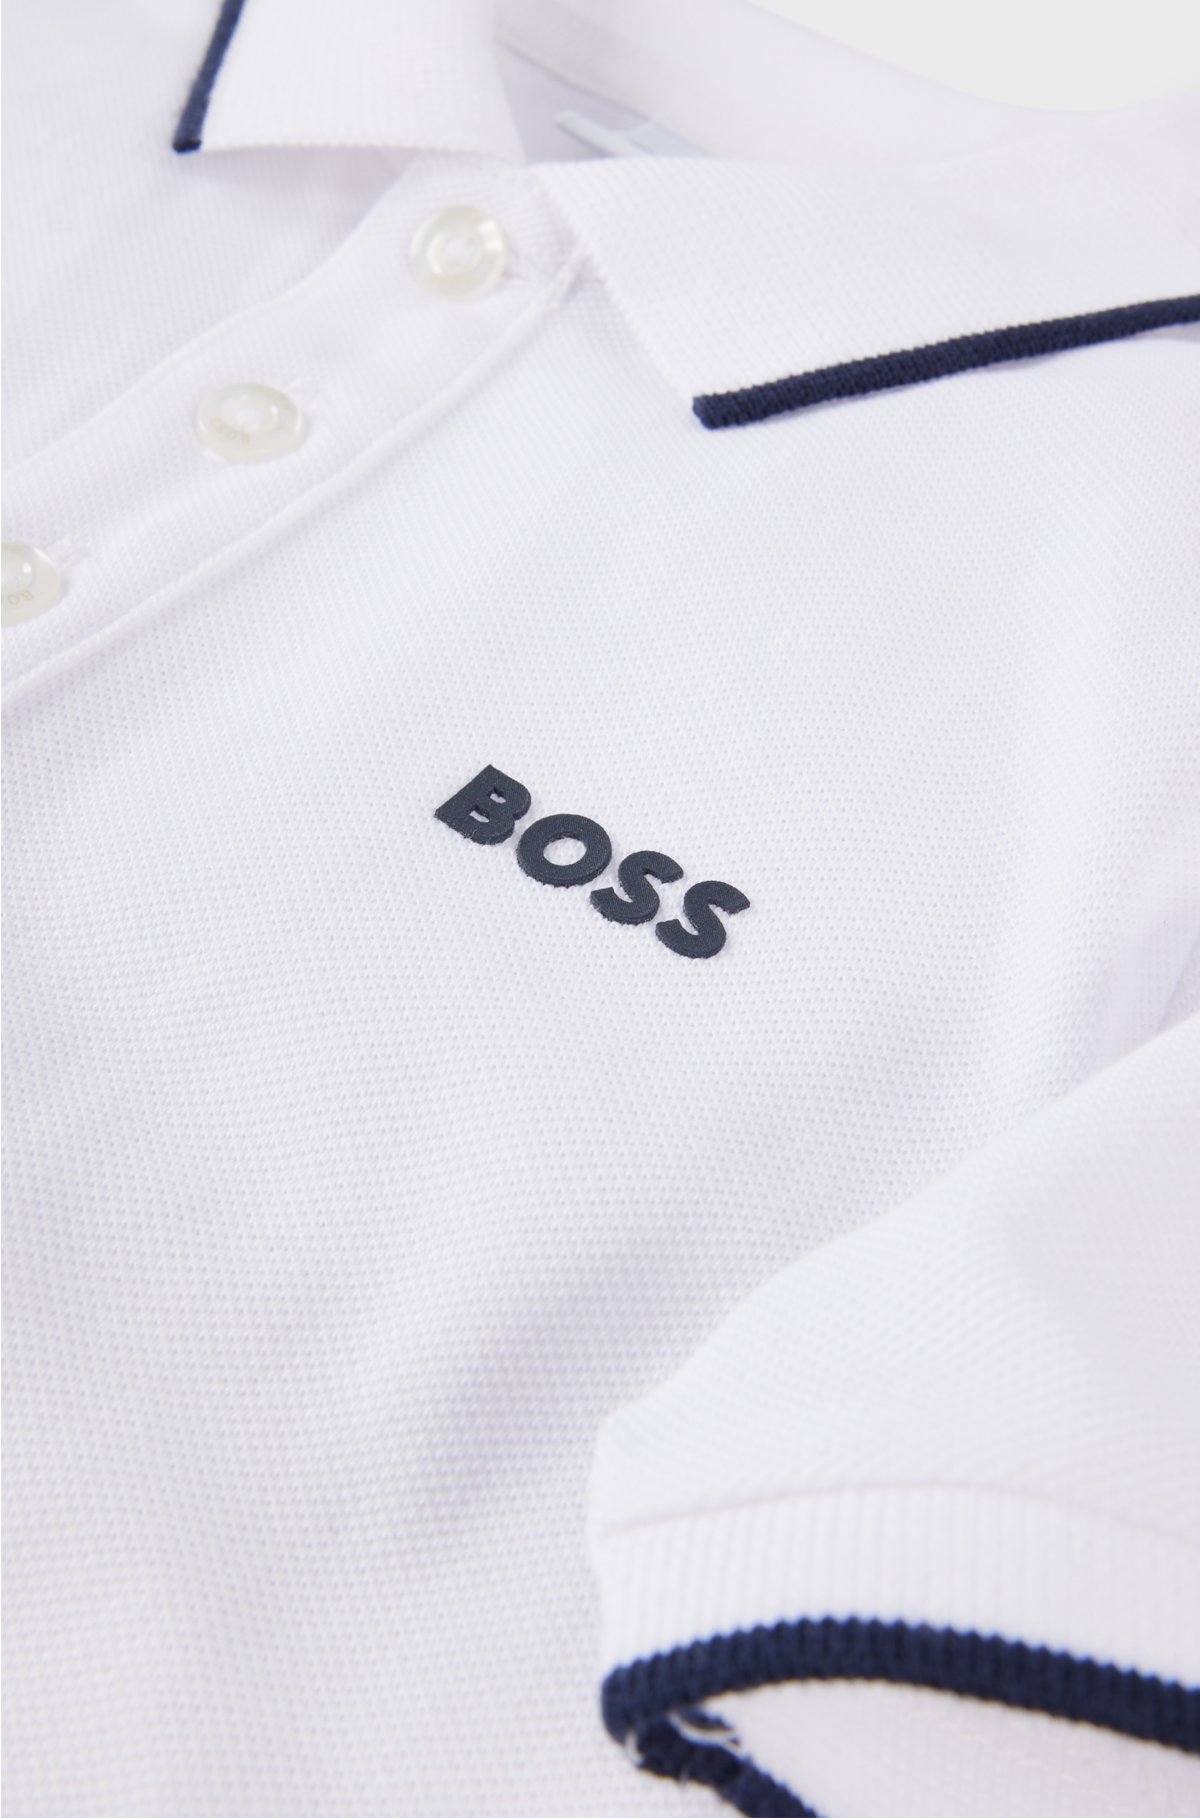 Kids' polo shirt in cotton piqué with printed logo, White